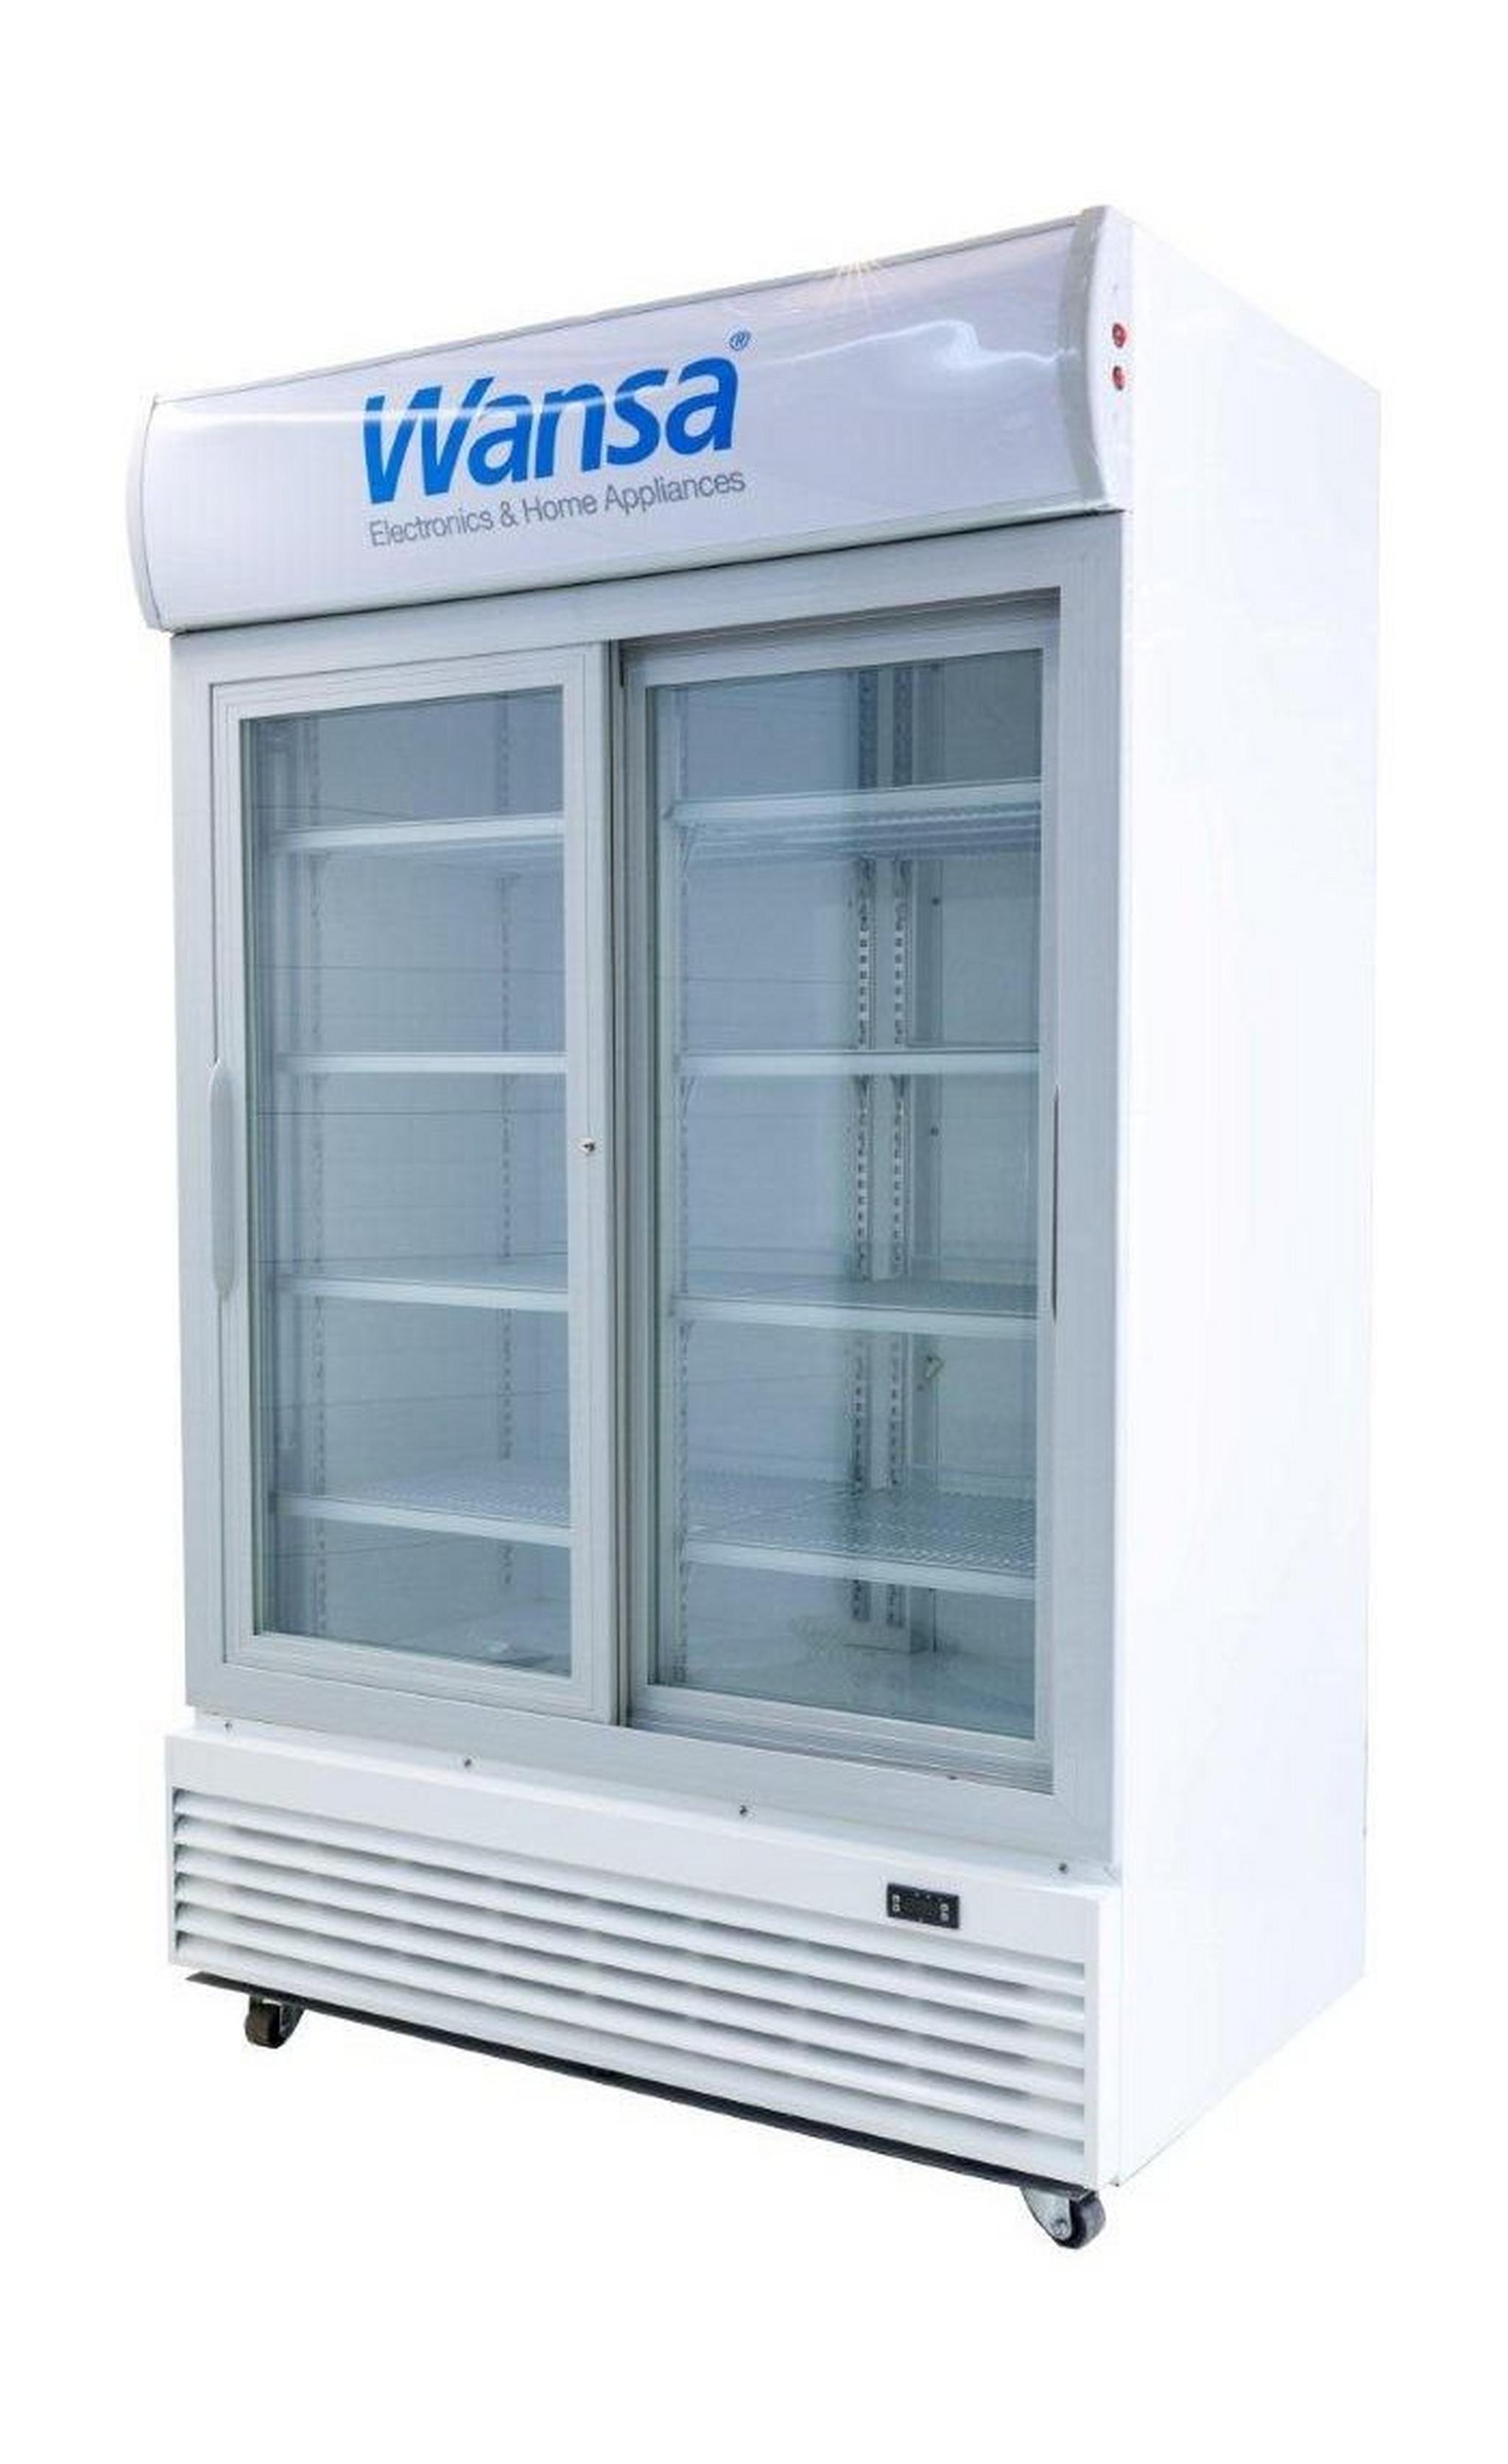 Wansa 35 Cft. Window Refrigerator (WUSC1000NFWT) - White